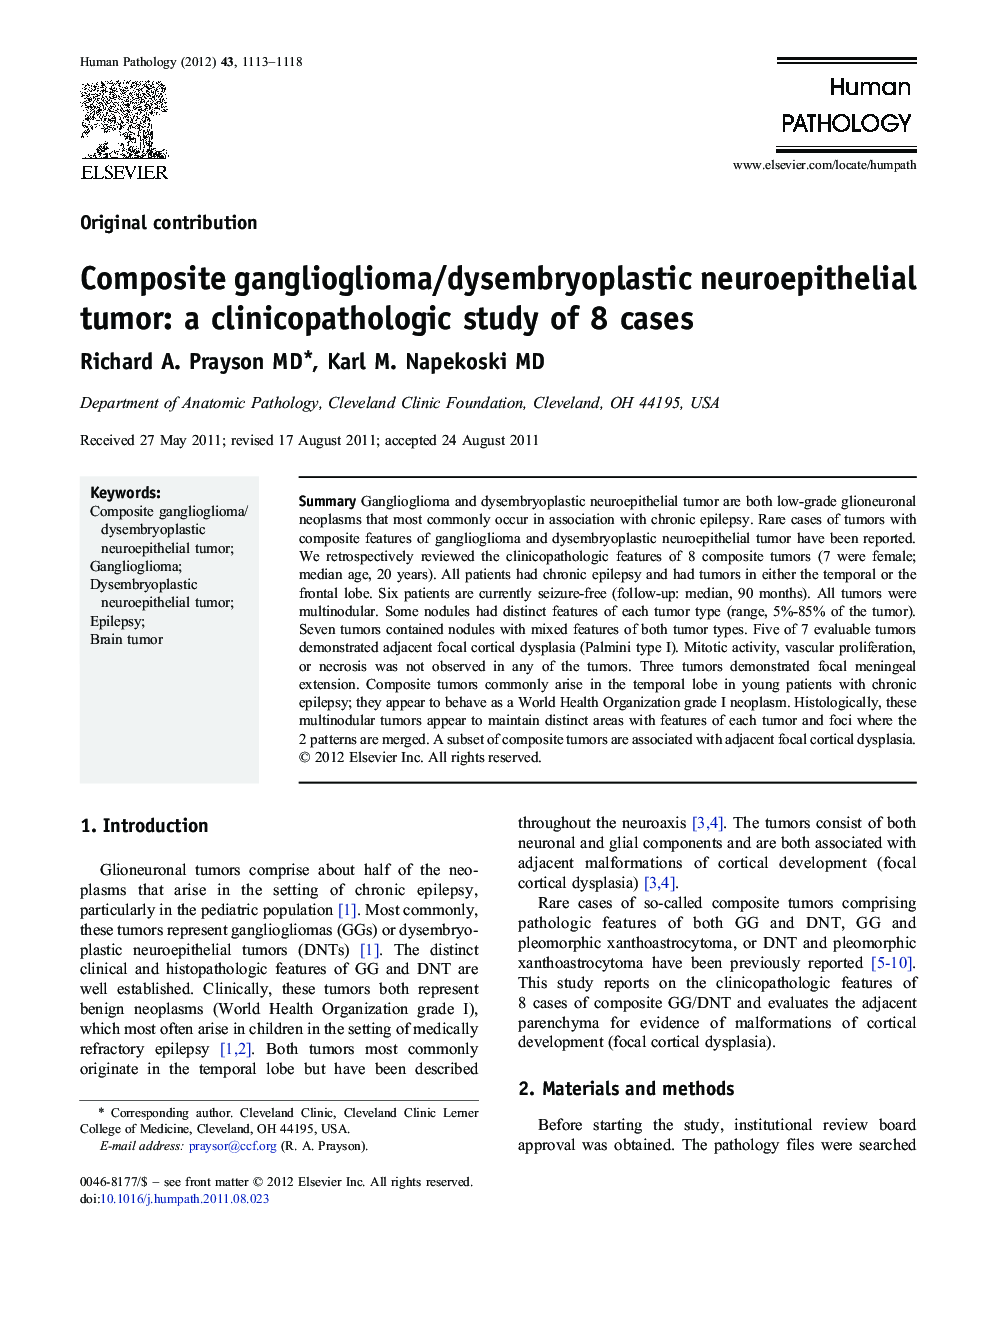 Composite ganglioglioma/dysembryoplastic neuroepithelial tumor: a clinicopathologic study of 8 cases